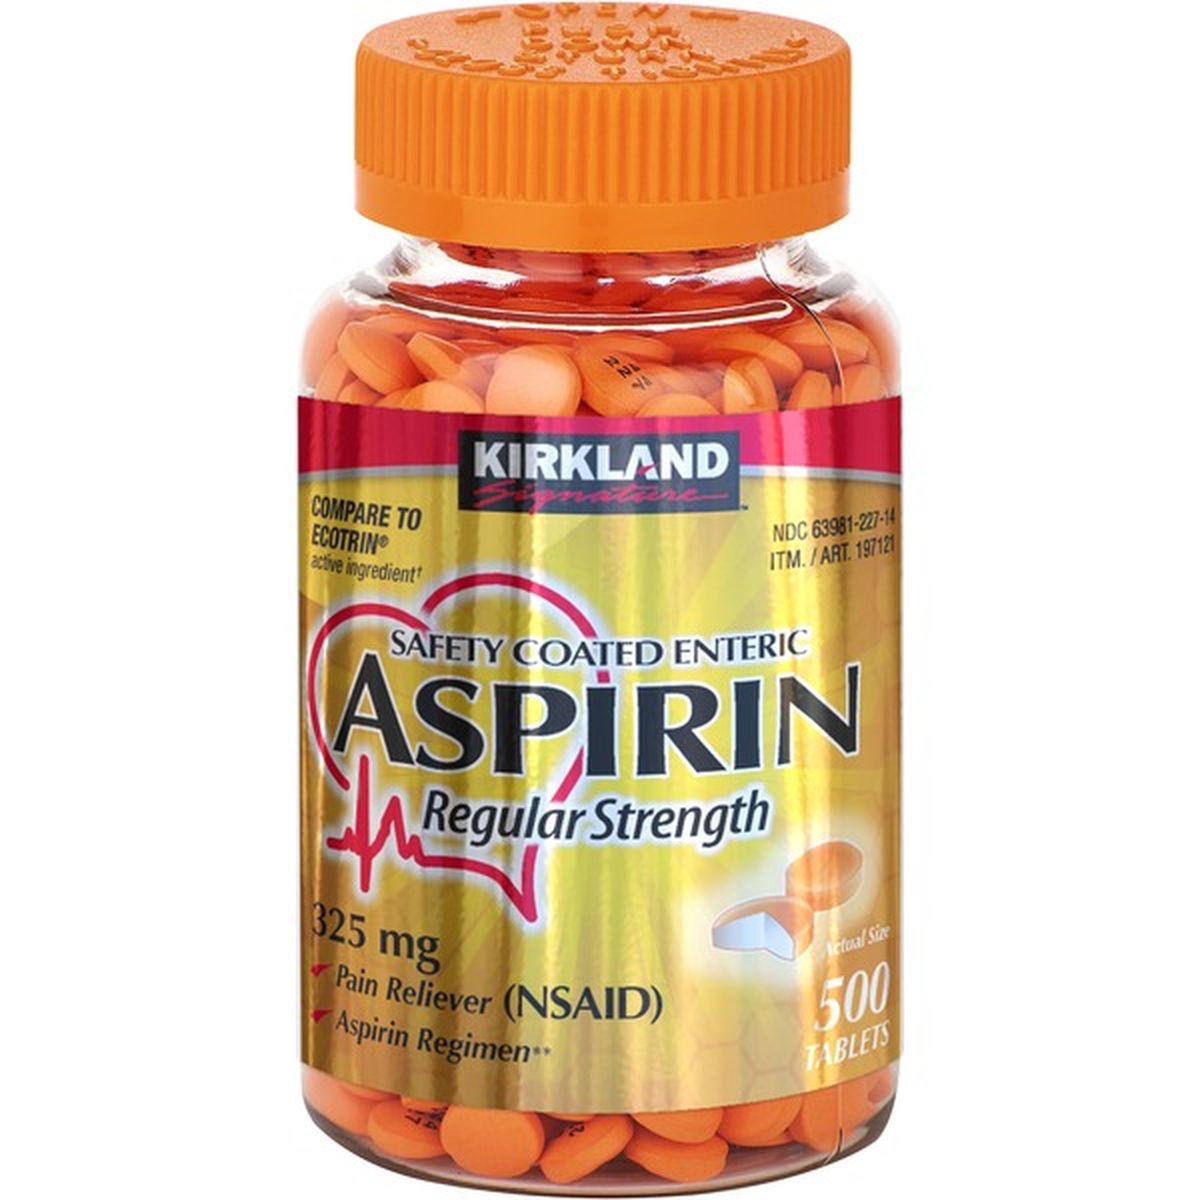 Enteric-Coated Aspirin vs. Plain Aspirin: What's the Difference?